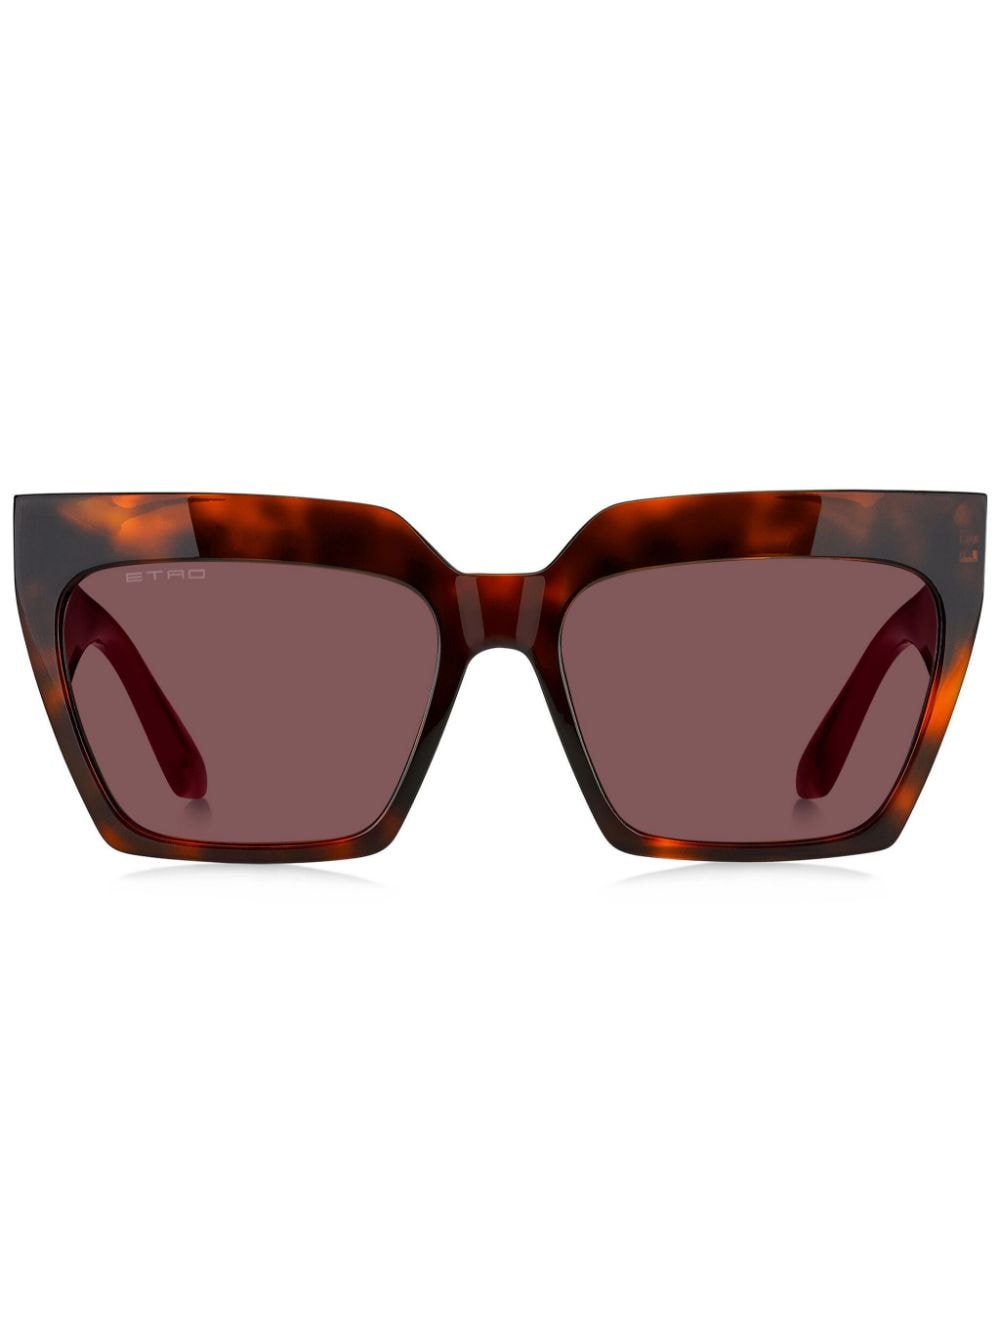 Etro Tailoring Cat-eye Sunglasses In Brown